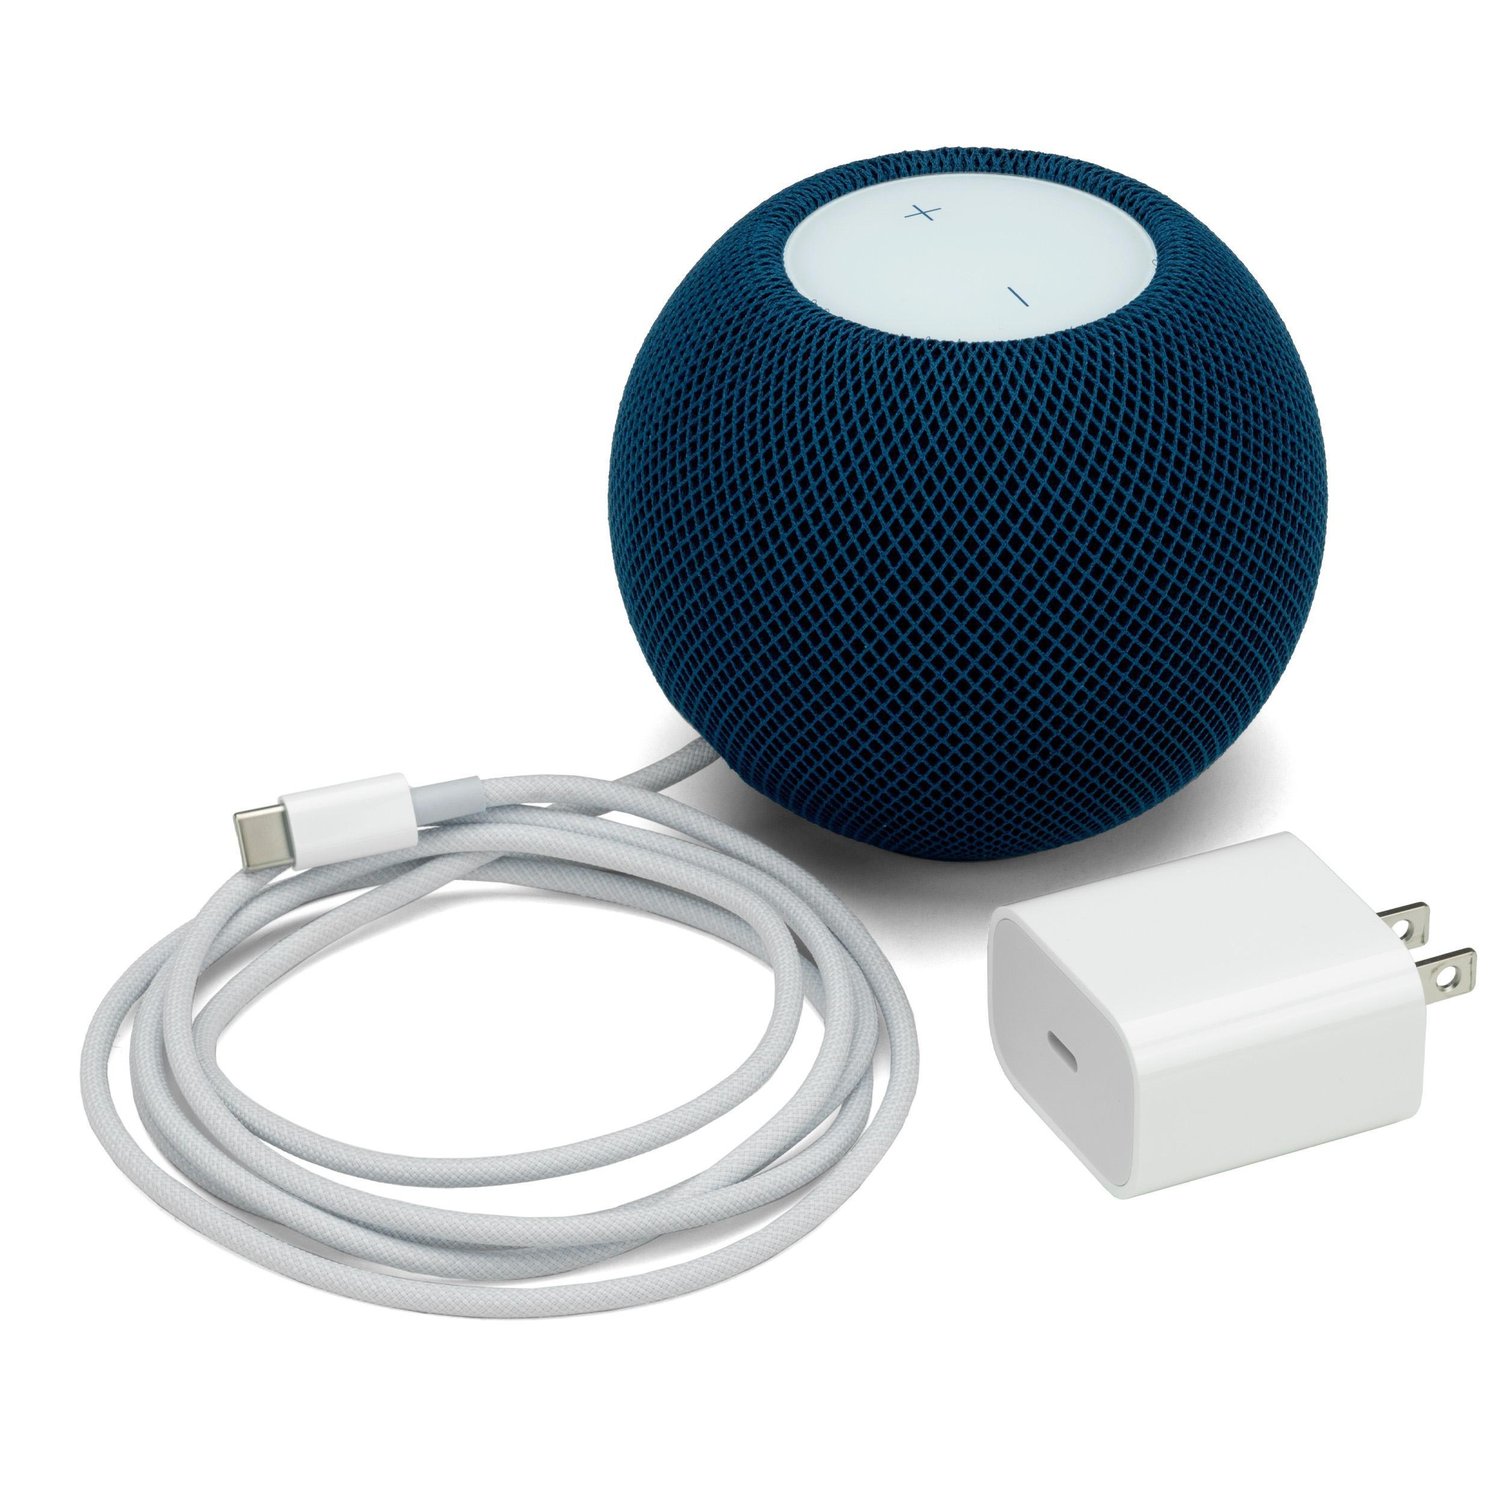 Apple HomePod mini - Blue